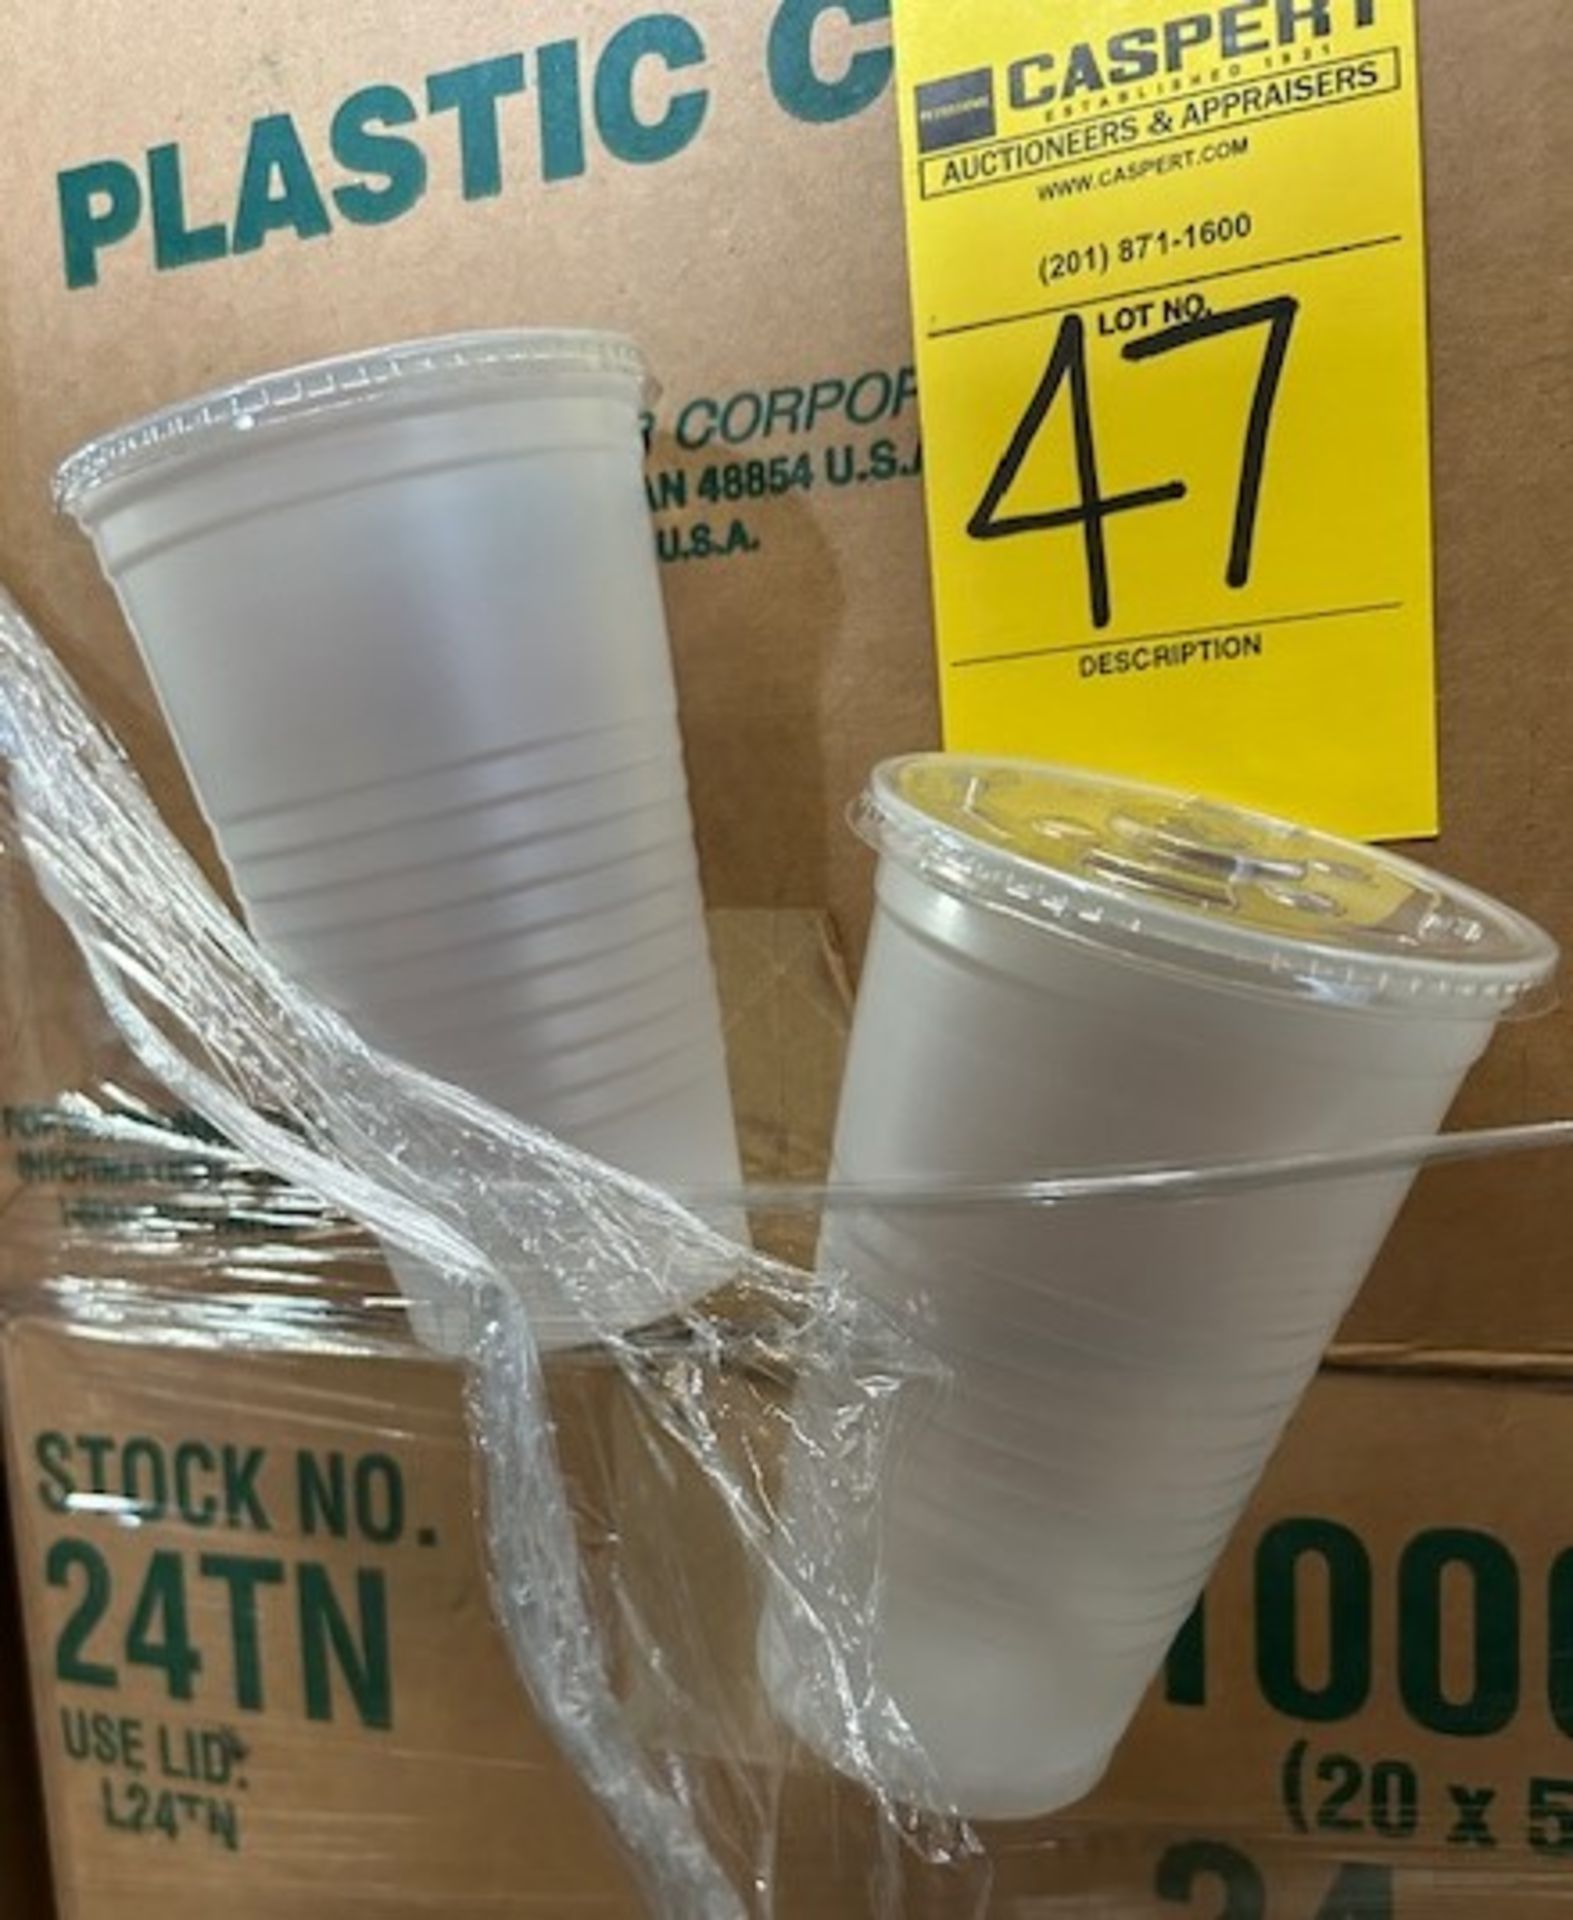 LOT - Dart 24TN 24 Oz. Plastic Cup with Lids (2000 Sets)